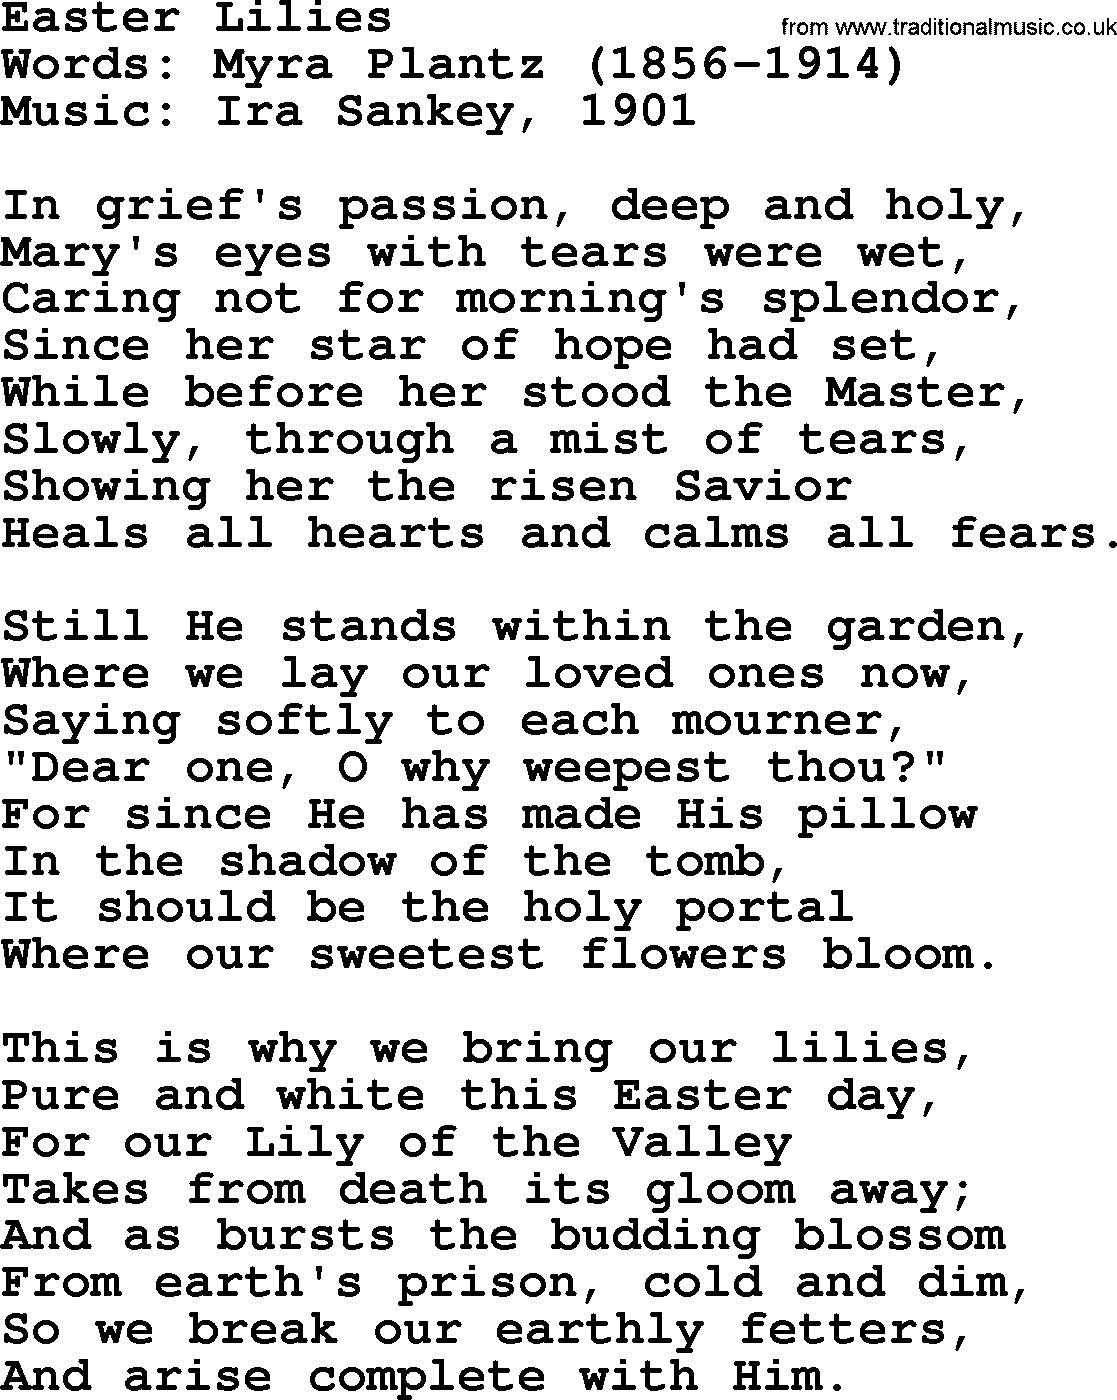 Ira Sankey hymn: Easter Lilies-Ira Sankey, lyrics